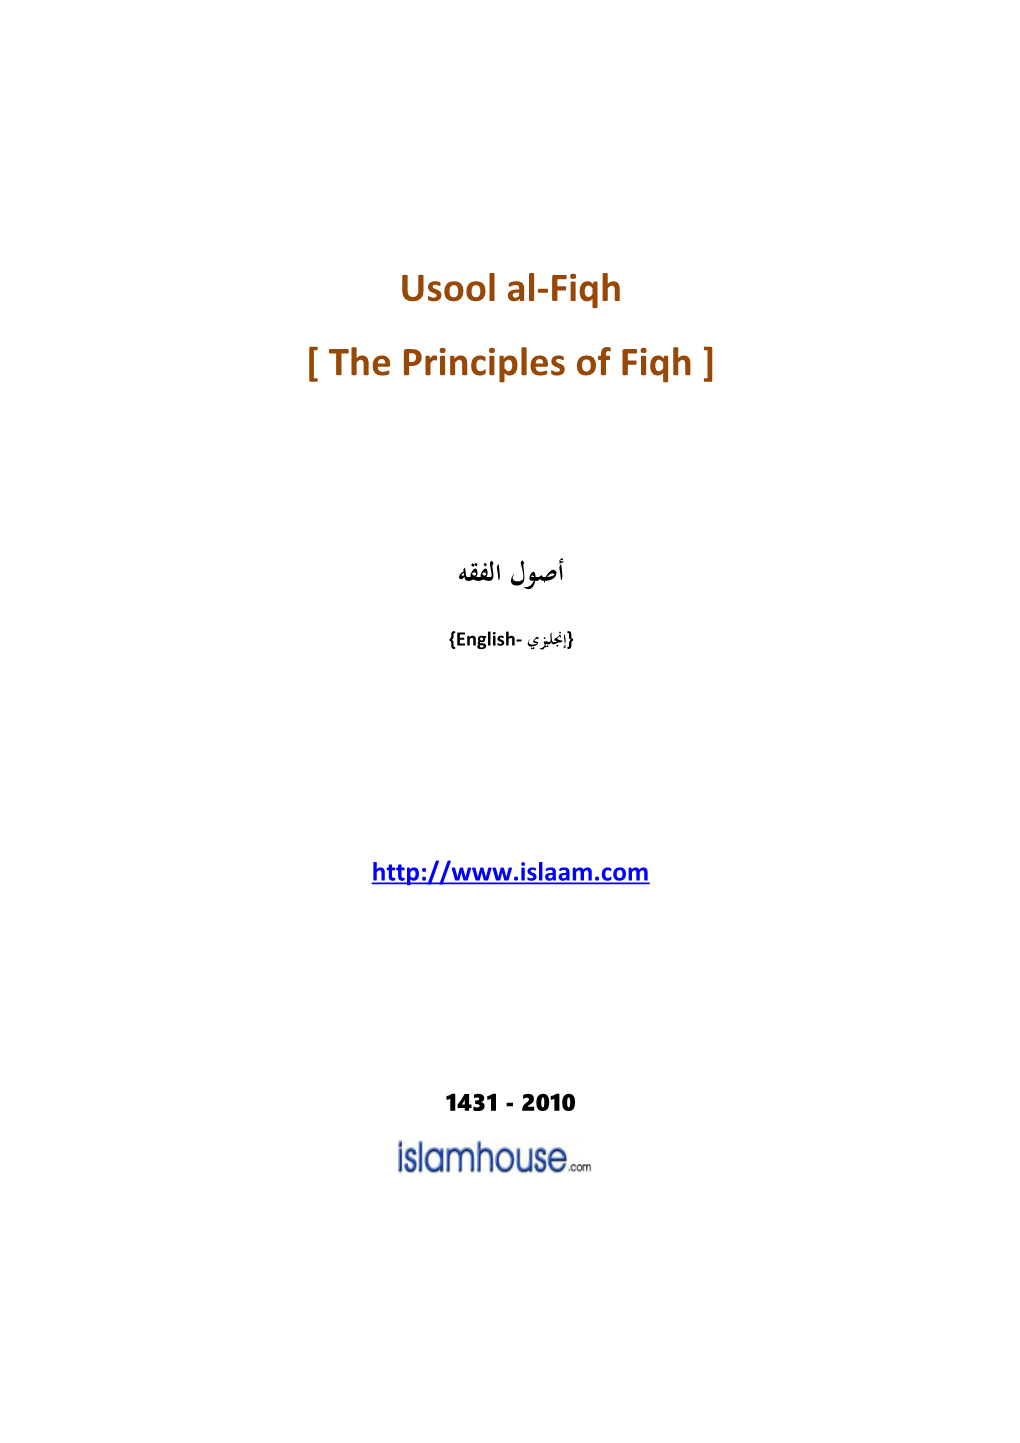 Usool Al-Fiqh the Principles of Fiqh